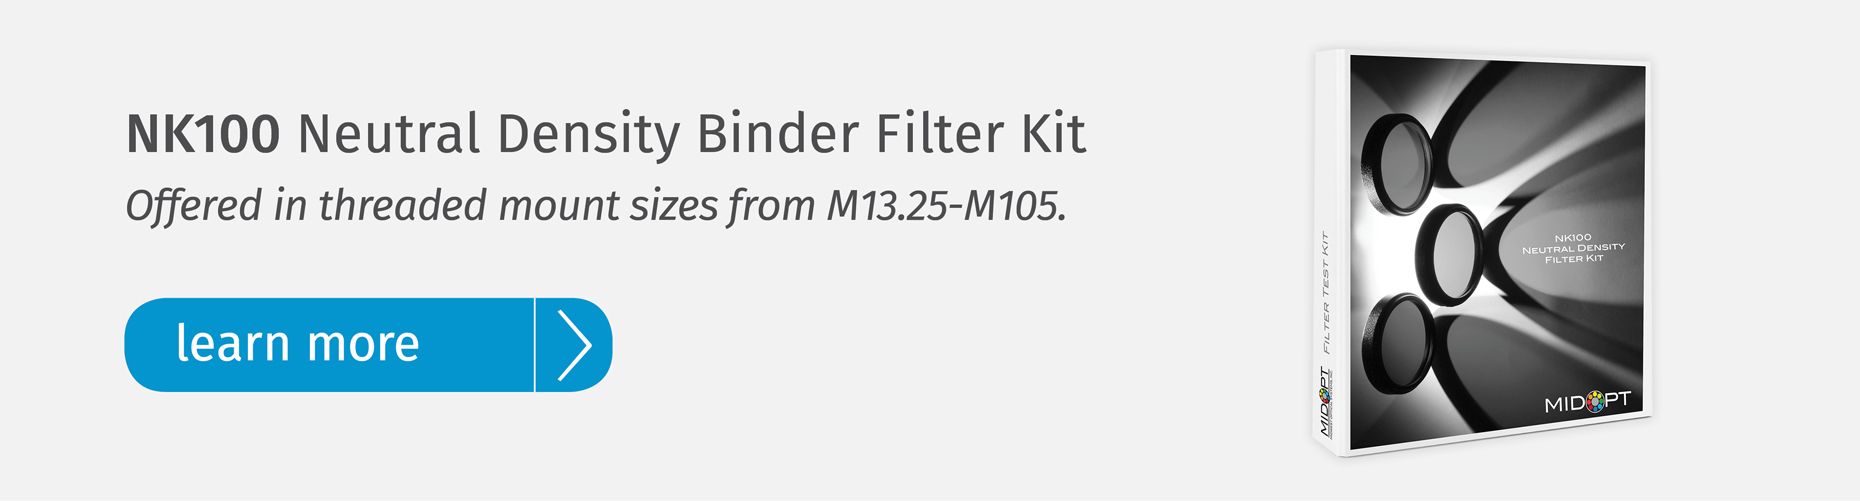 MidOpt NK100 Neutral Density Binder Filter Test Kit